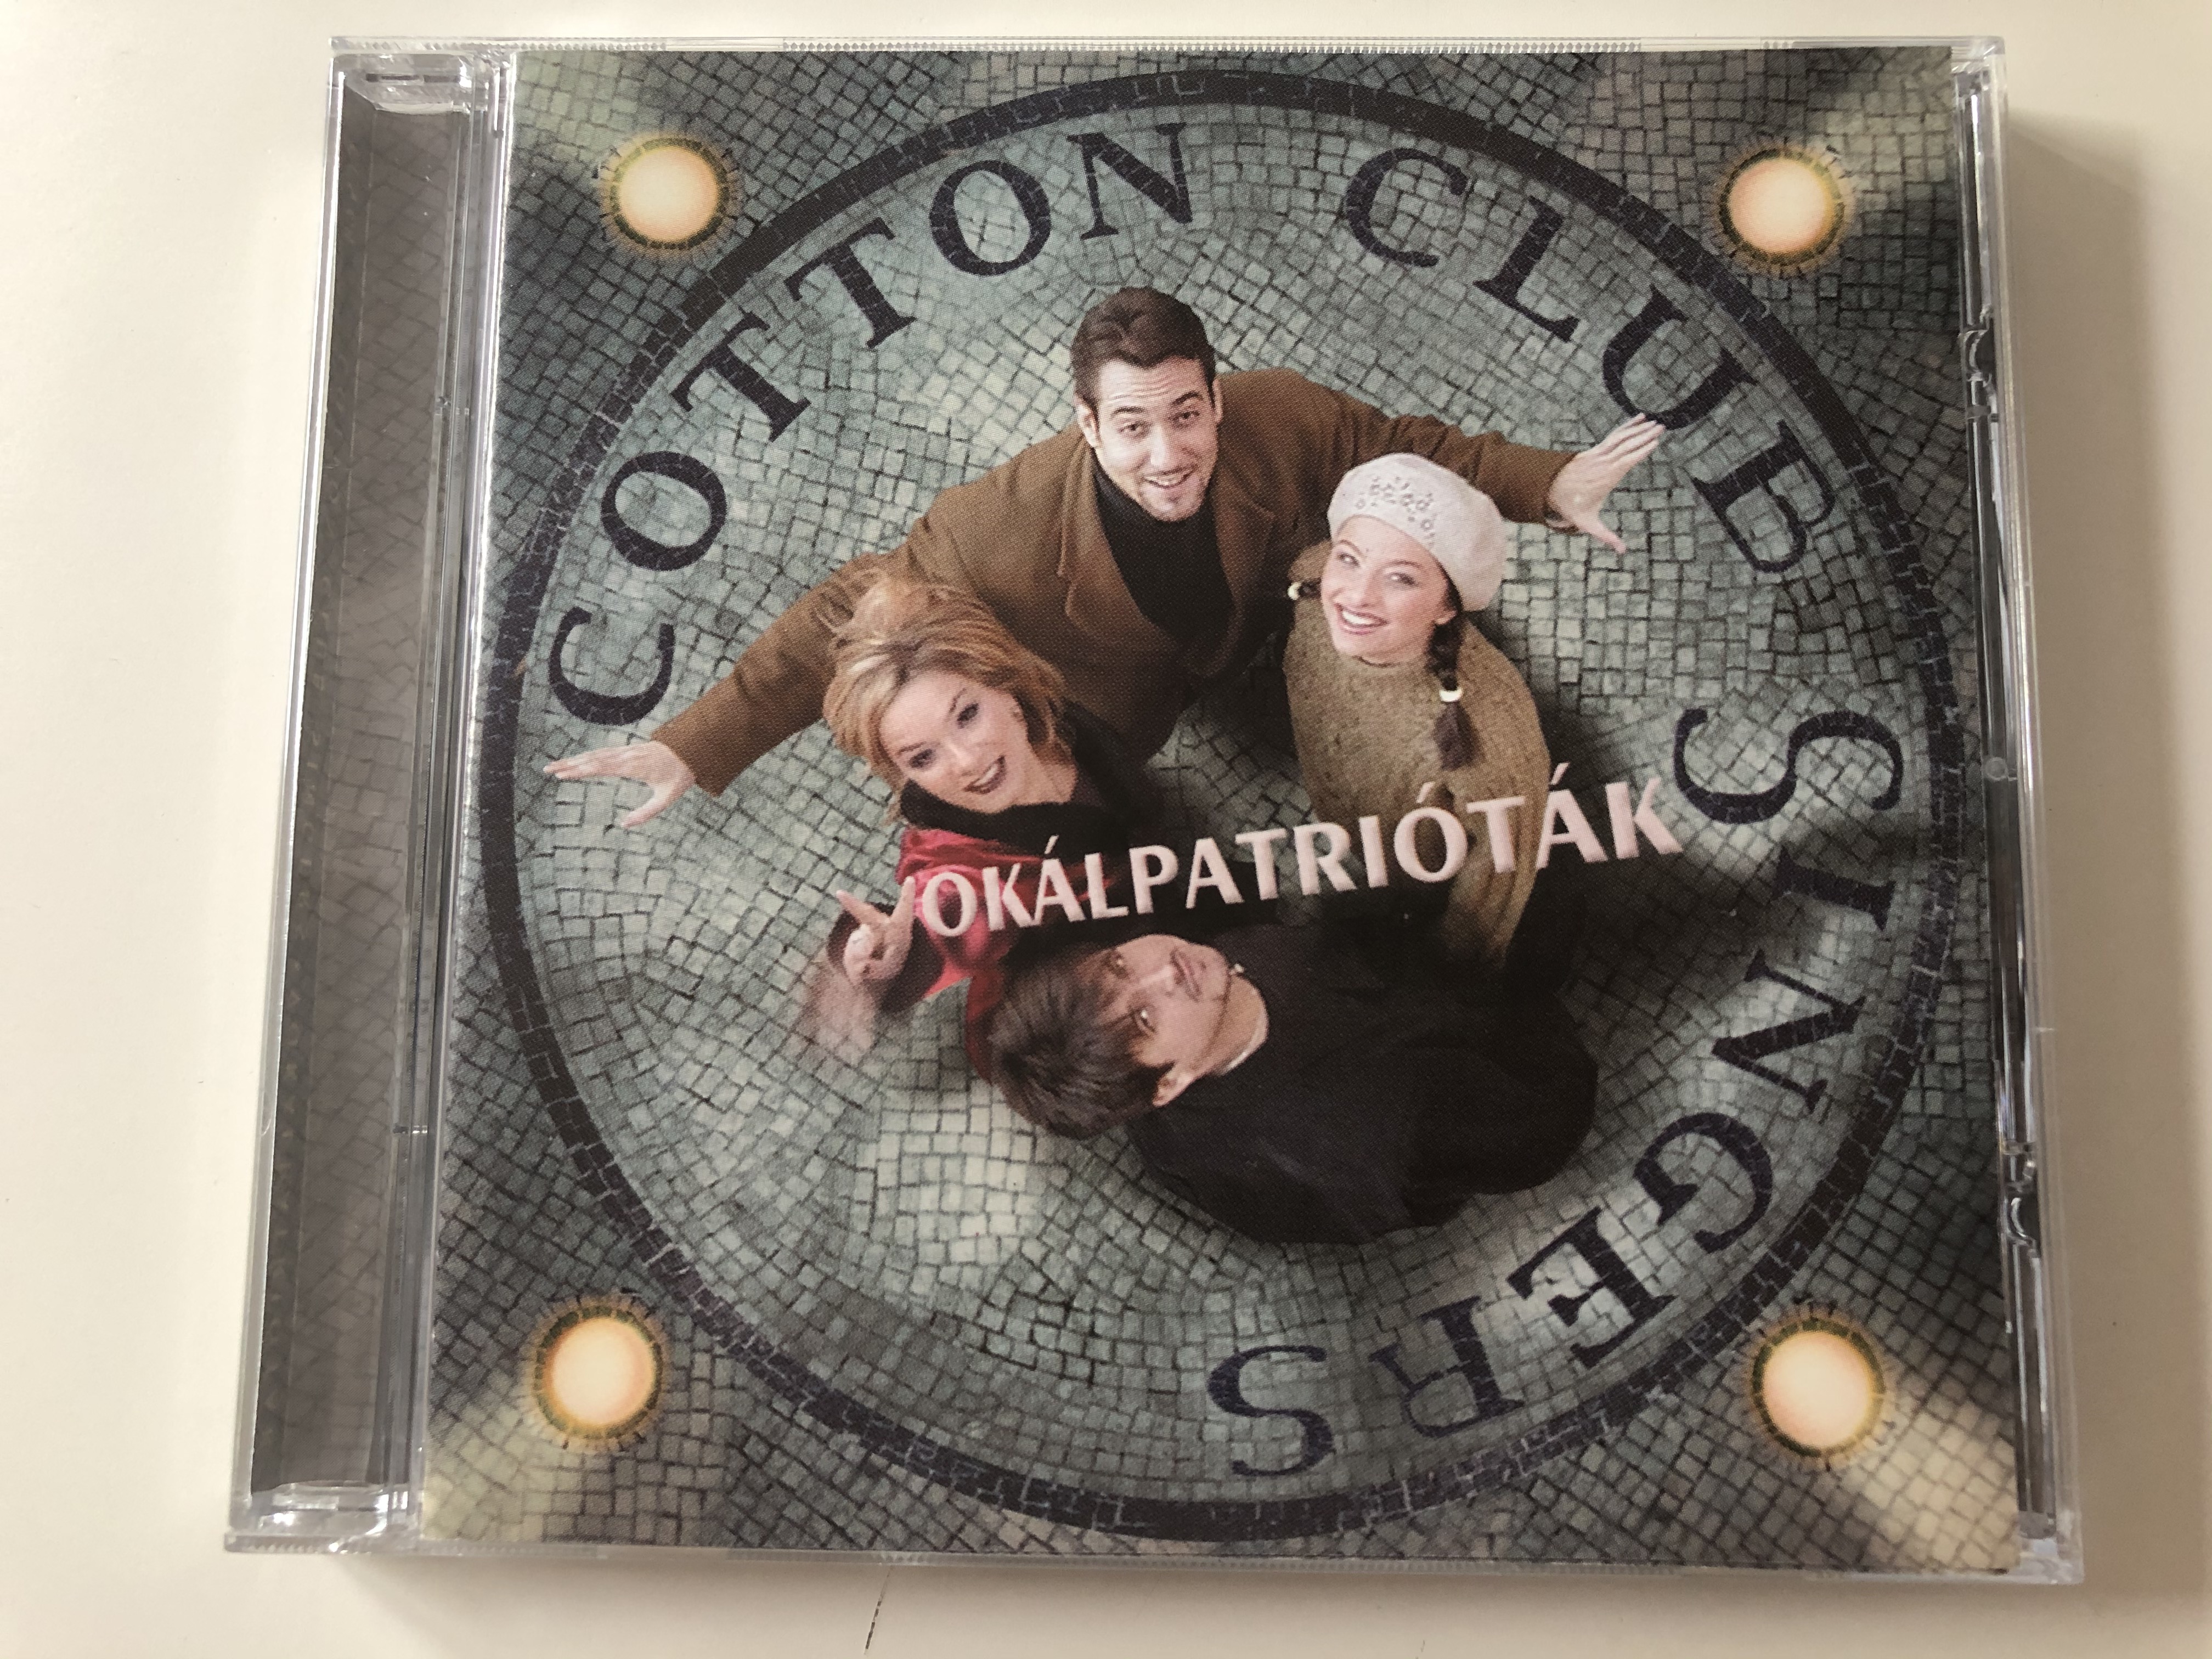 cotton-club-singers-vok-lpatri-t-k-geg-records-audio-cd-1999-ccs-08-1-.jpg